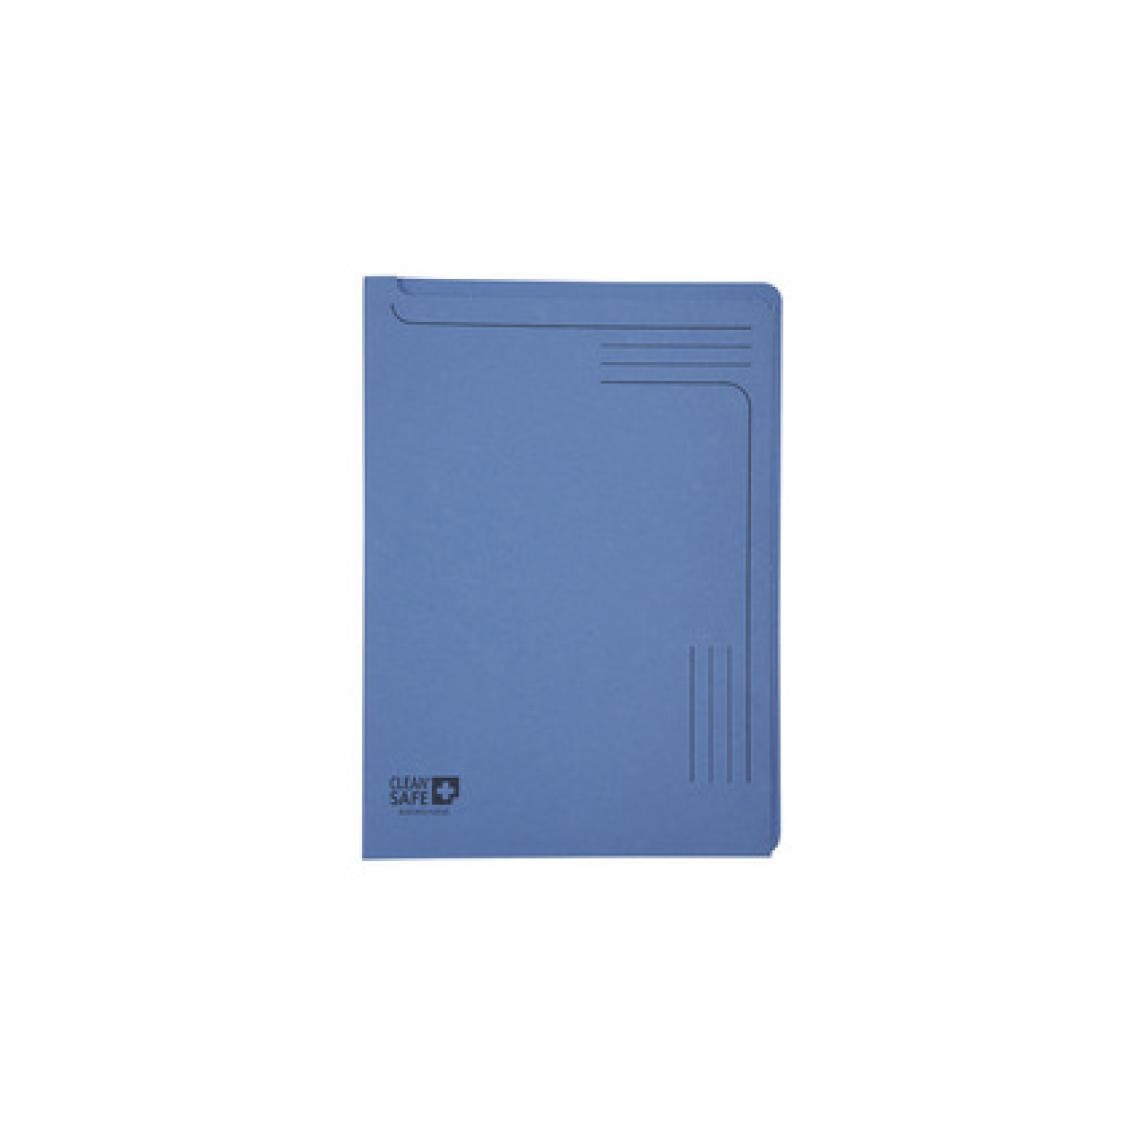 Exacompta - EXACOMPTA Chemise coin Clean'Safe, A4, carton, bleu () - Accessoires Bureau